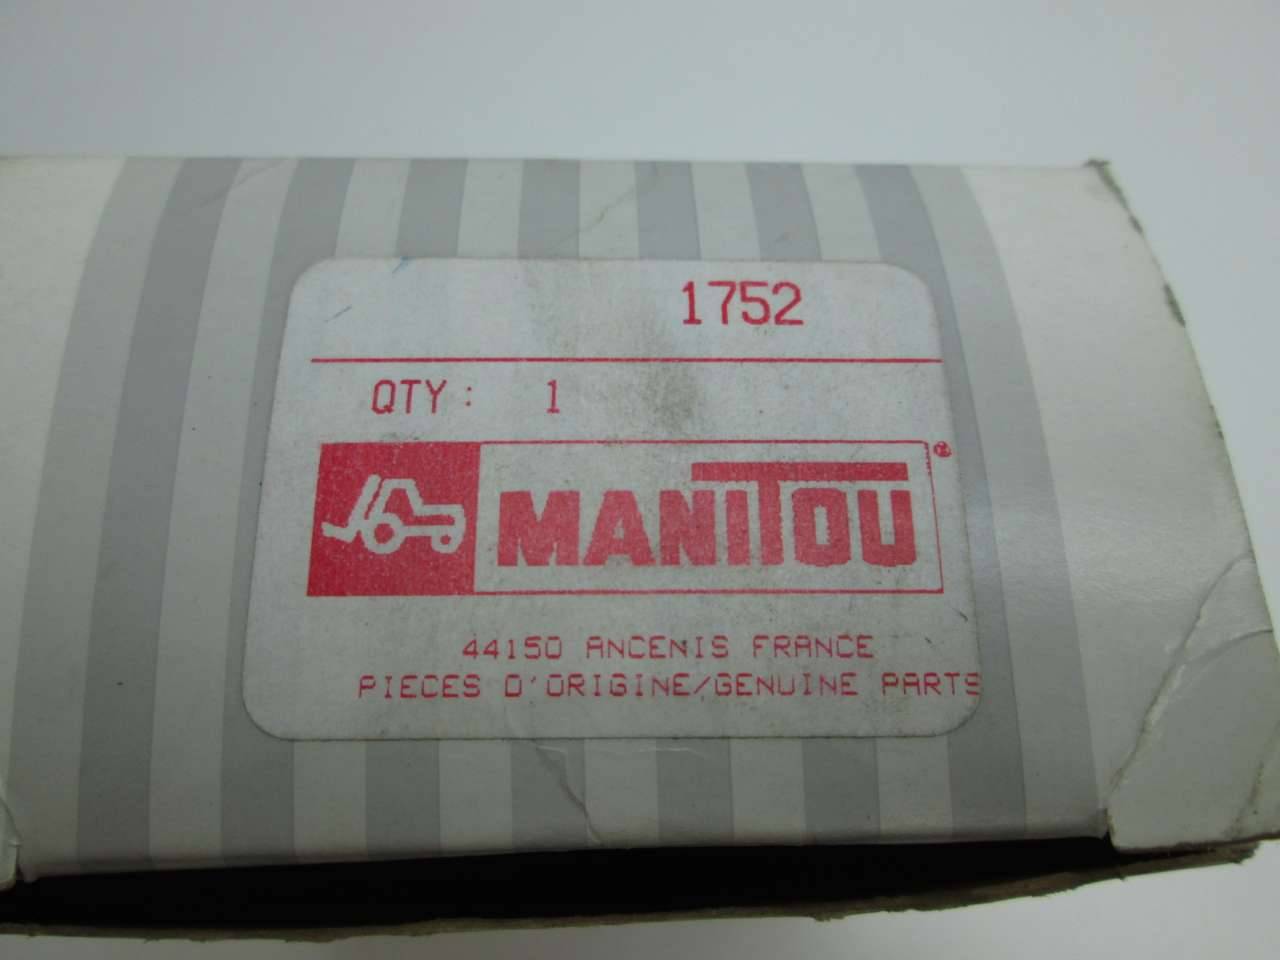 Manitou - Pièce d'origine / Genuine parts